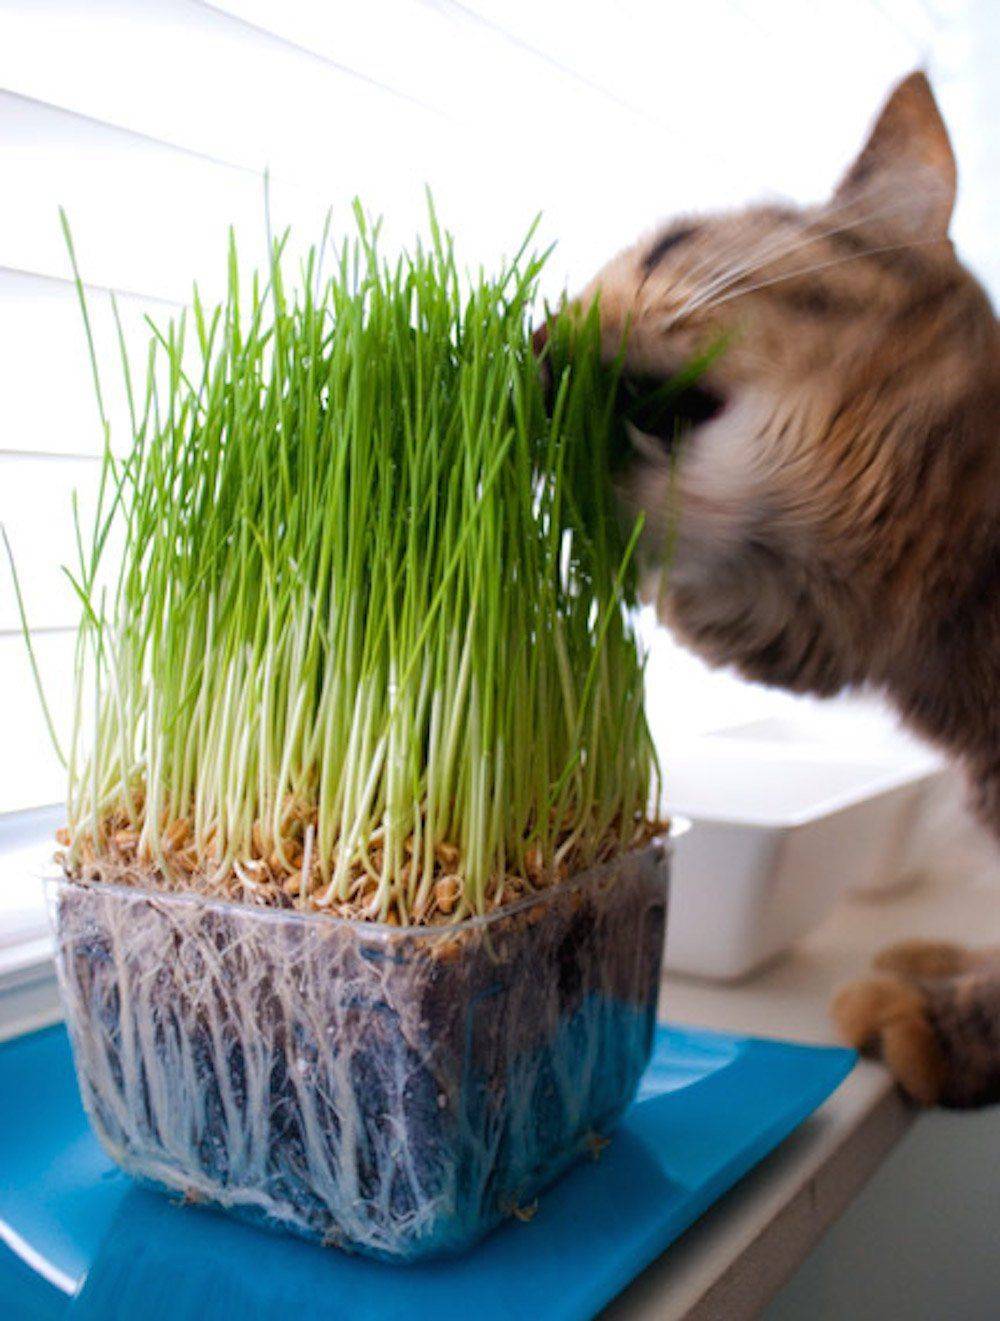 Какую траву любят и едят кошки